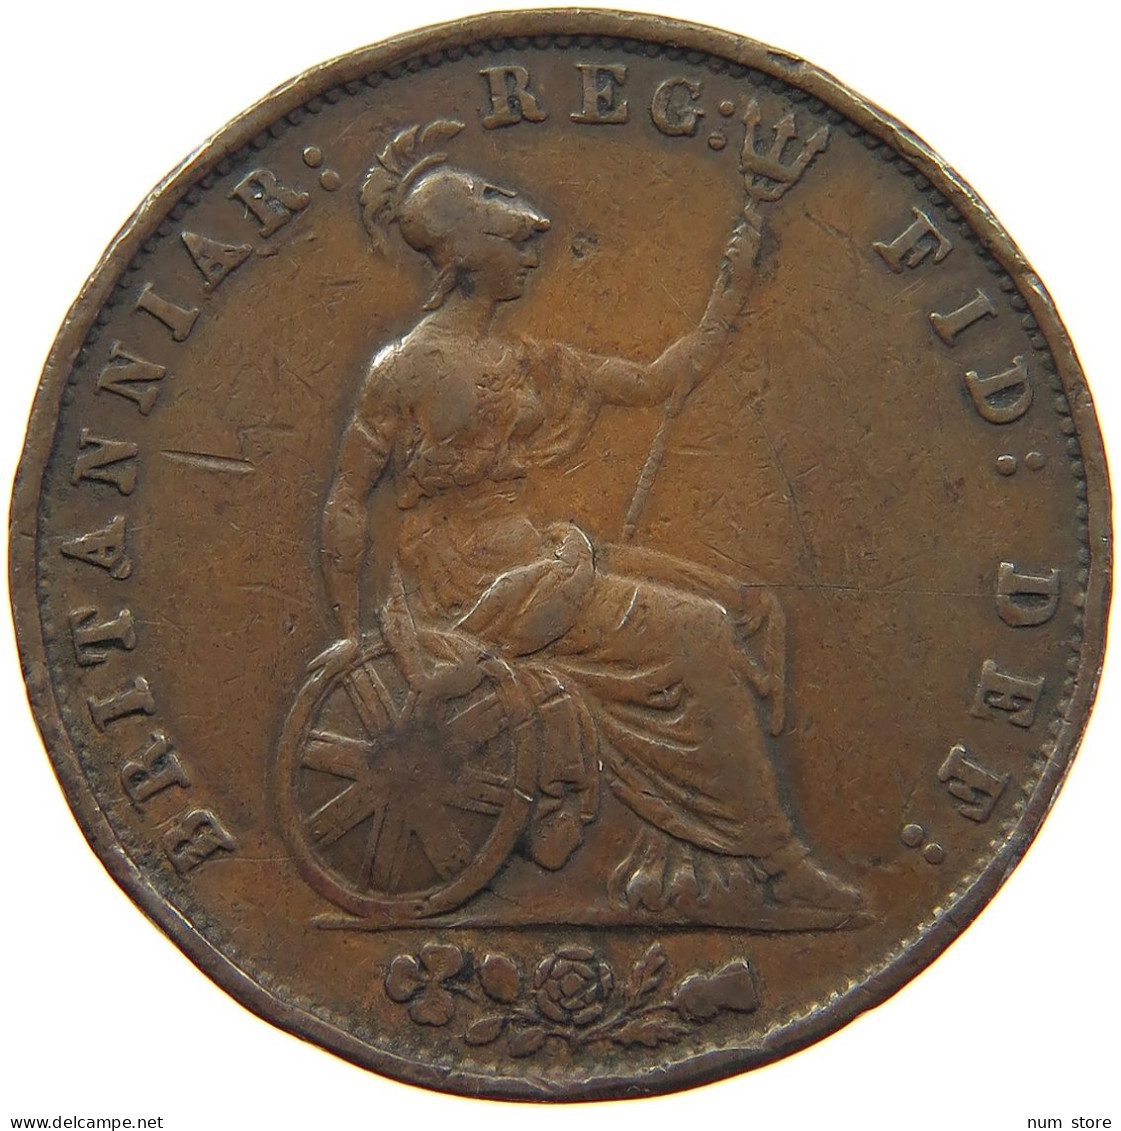 GREAT BRITAIN HALFPENNY 1854 Victoria 1837-1901 #s021 0339 - C. 1/2 Penny